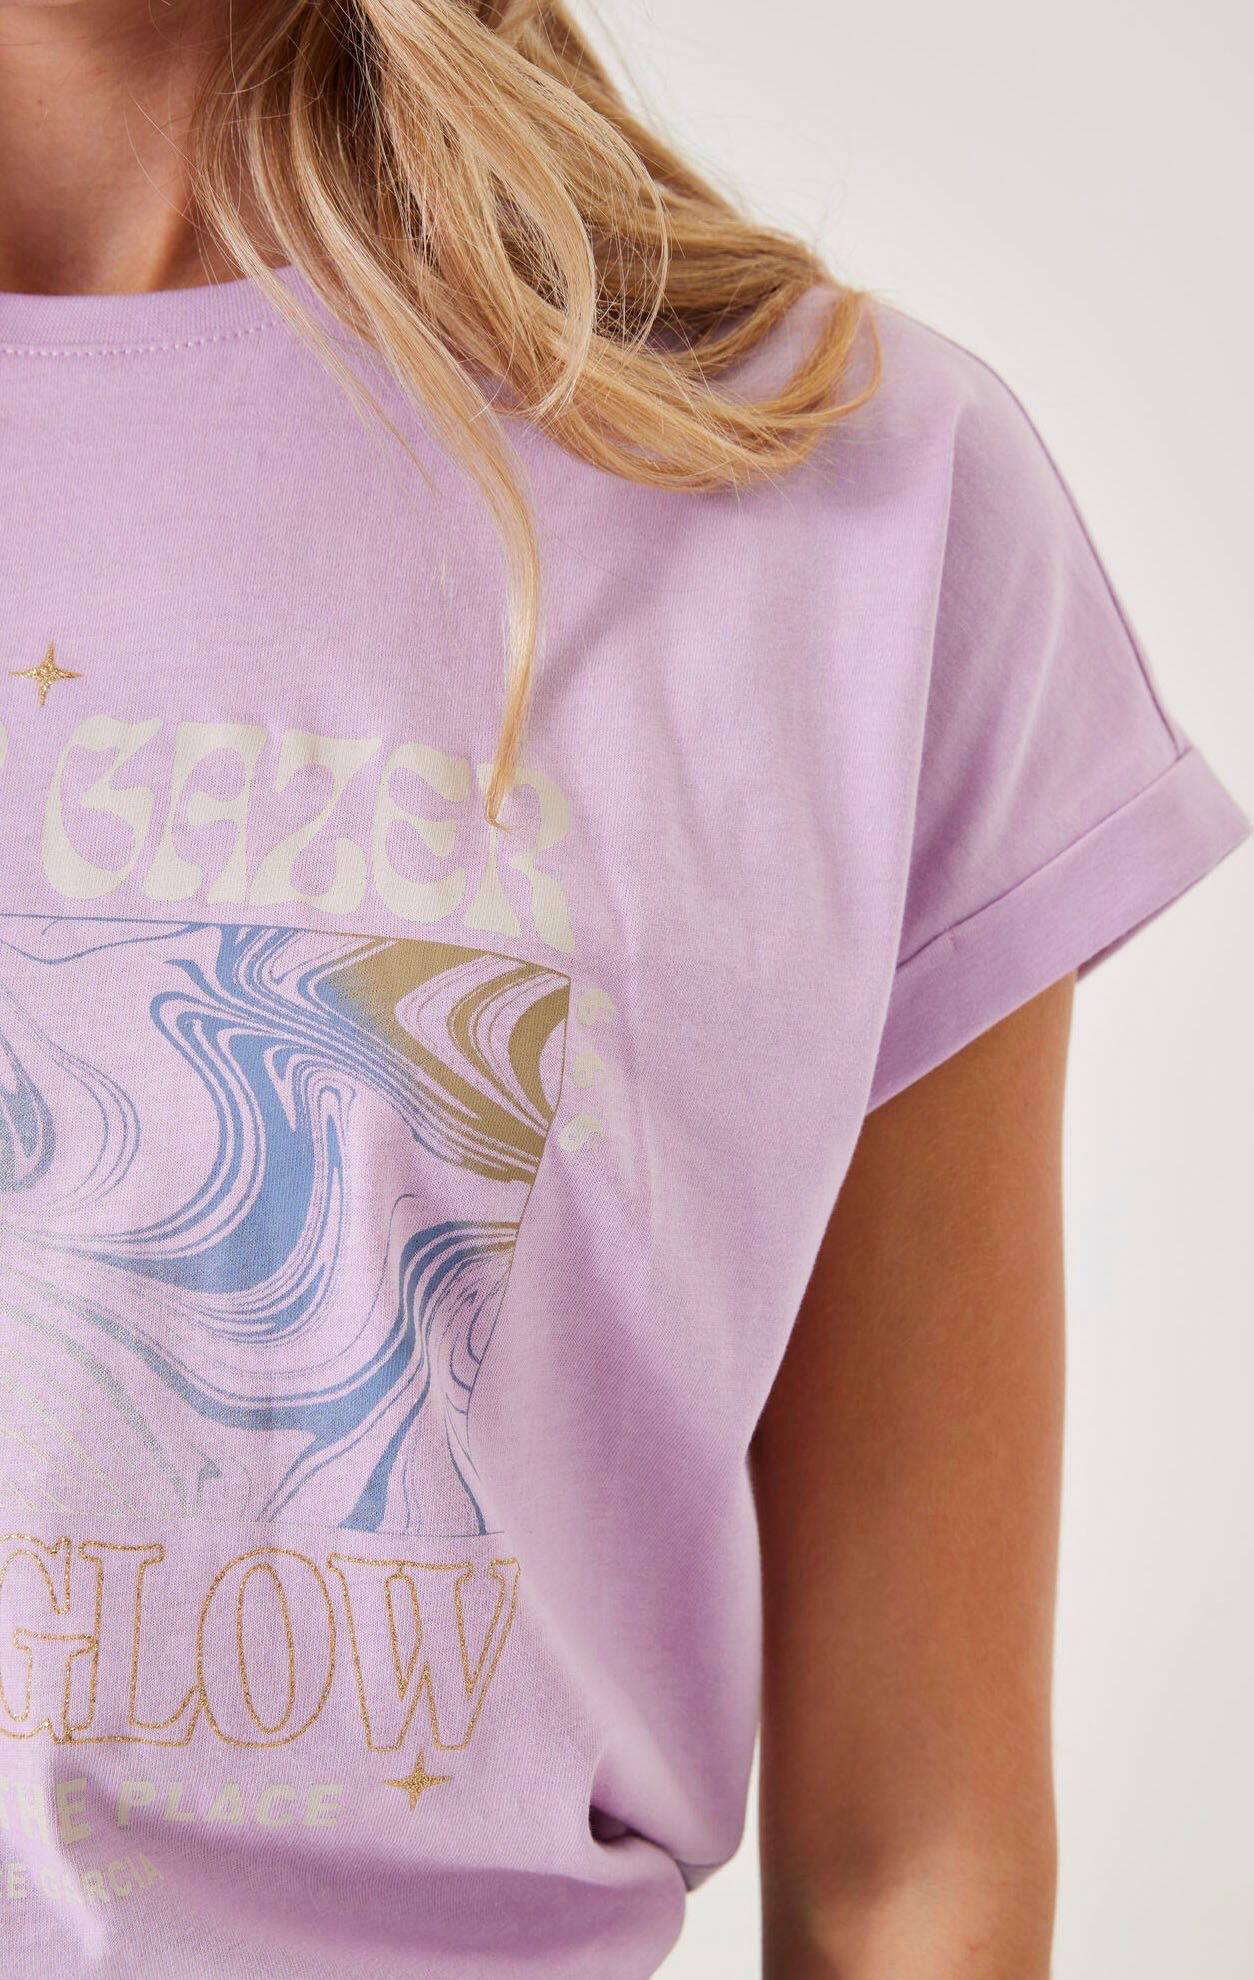 fragnant Garcia Print-Shirt lil